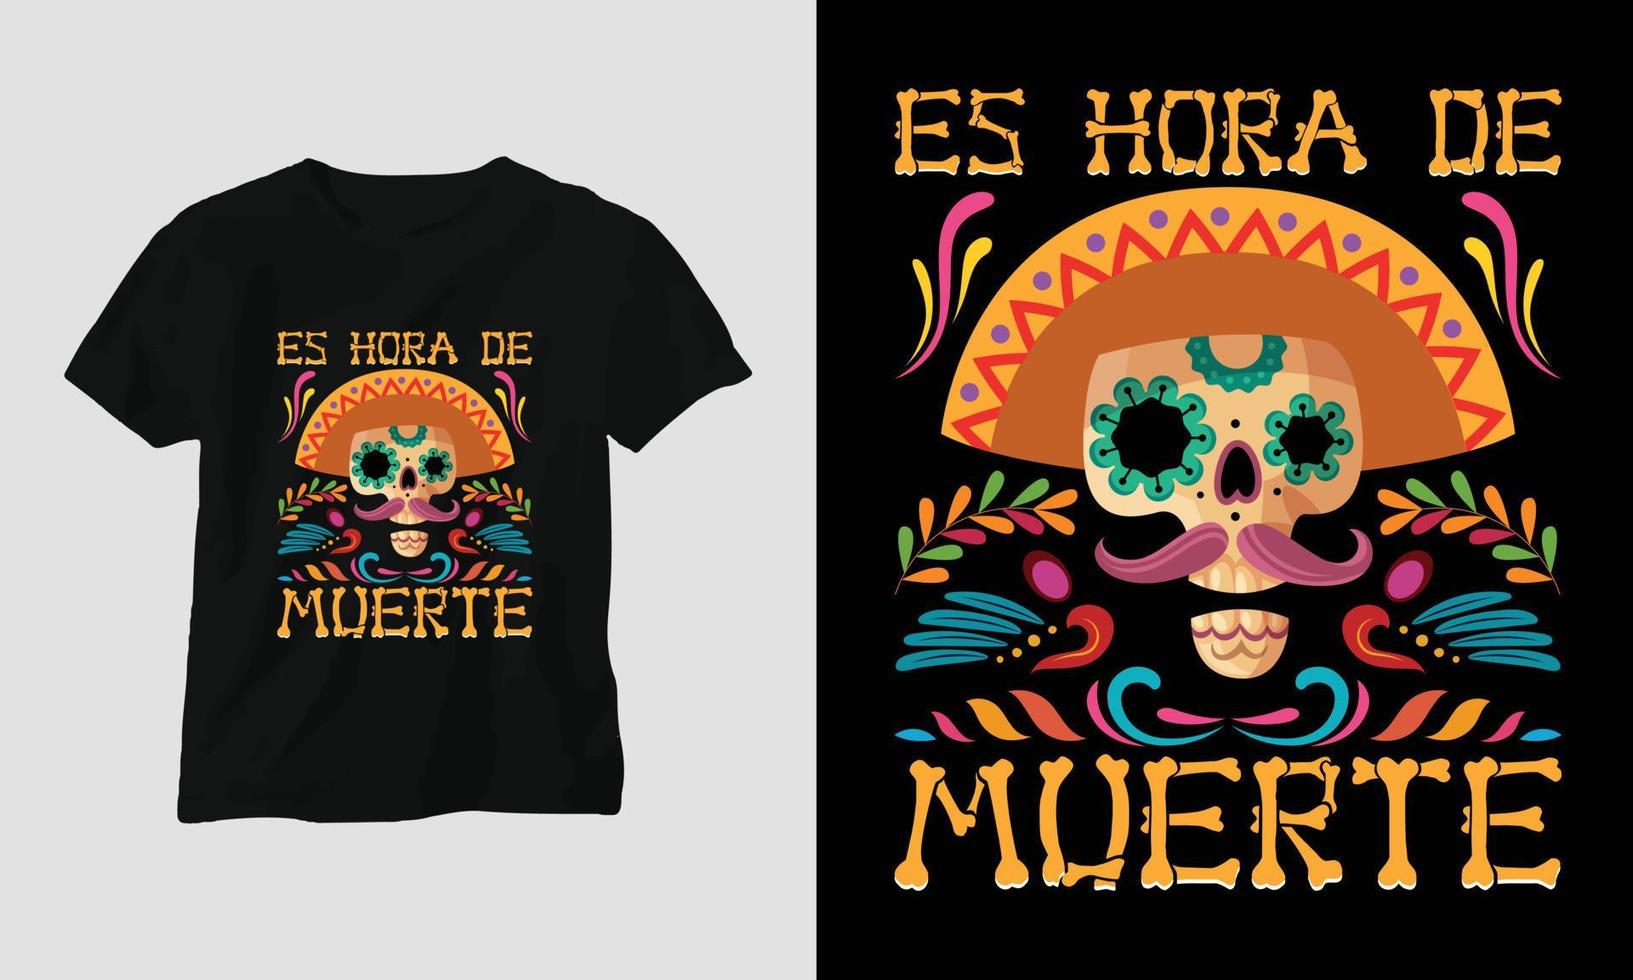 es hora de muerte - dia de los Muertos speciaal t-shirt ontwerp vector